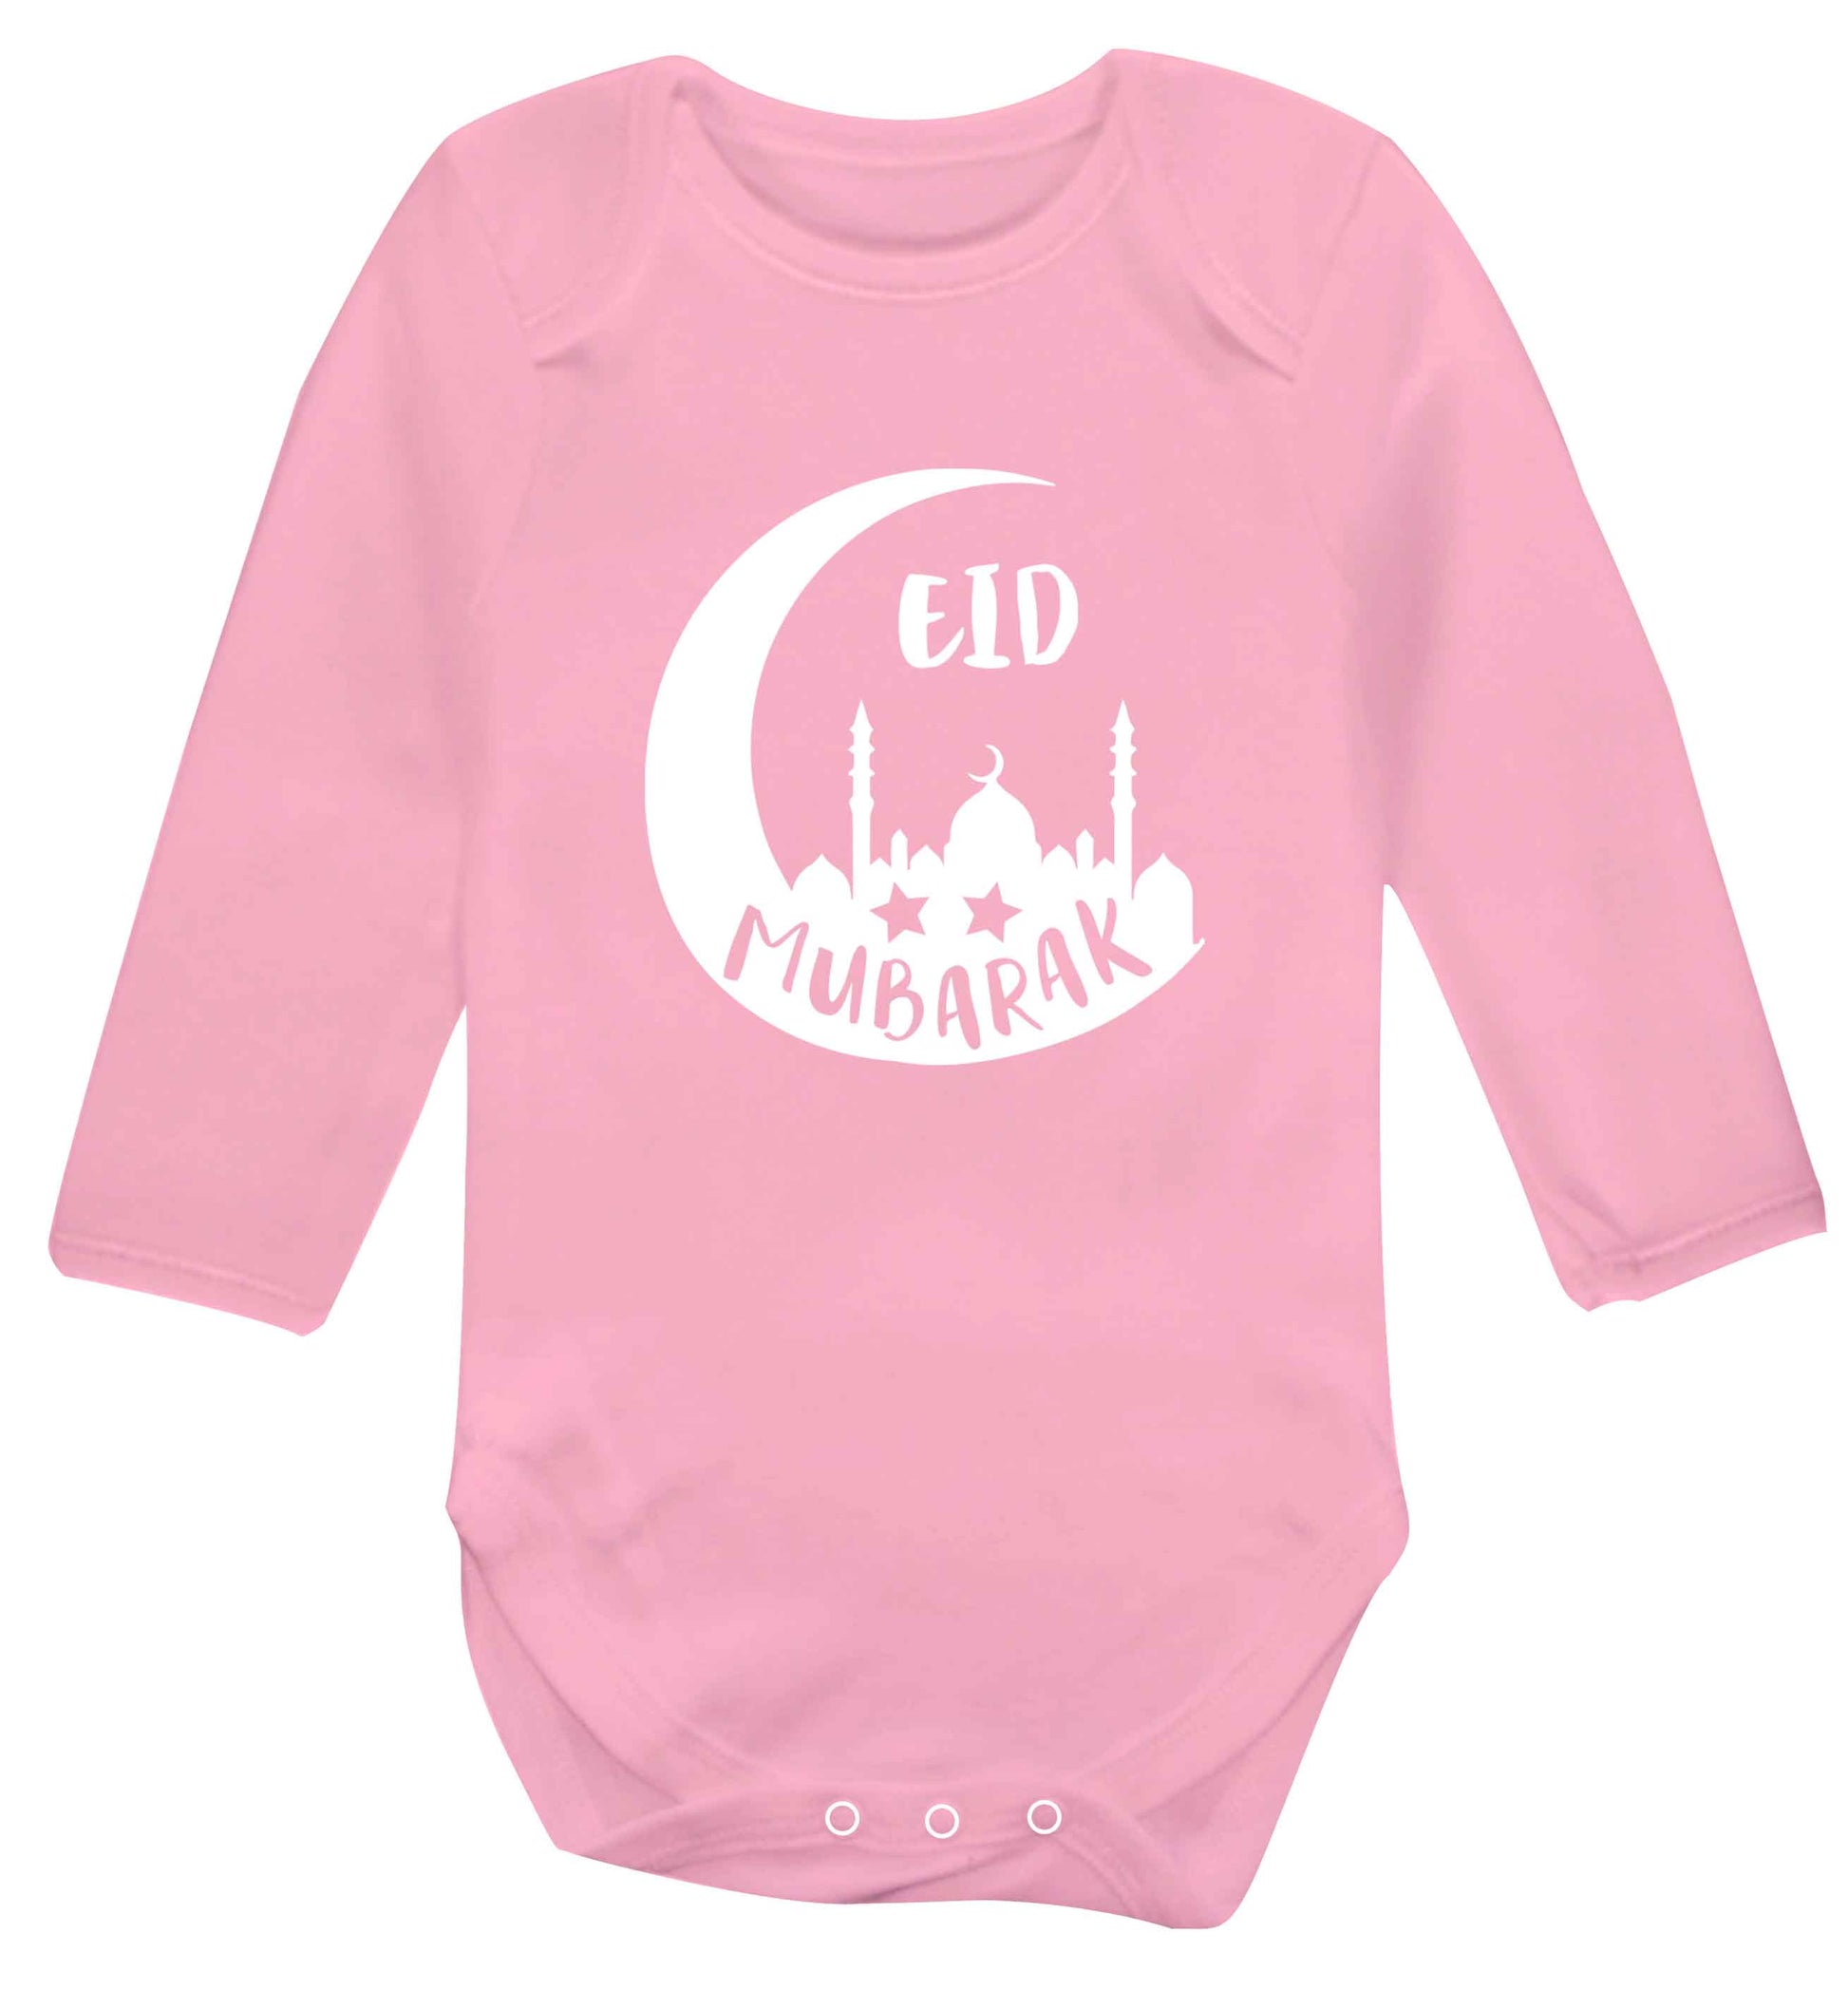 Eid mubarak baby vest long sleeved pale pink 6-12 months